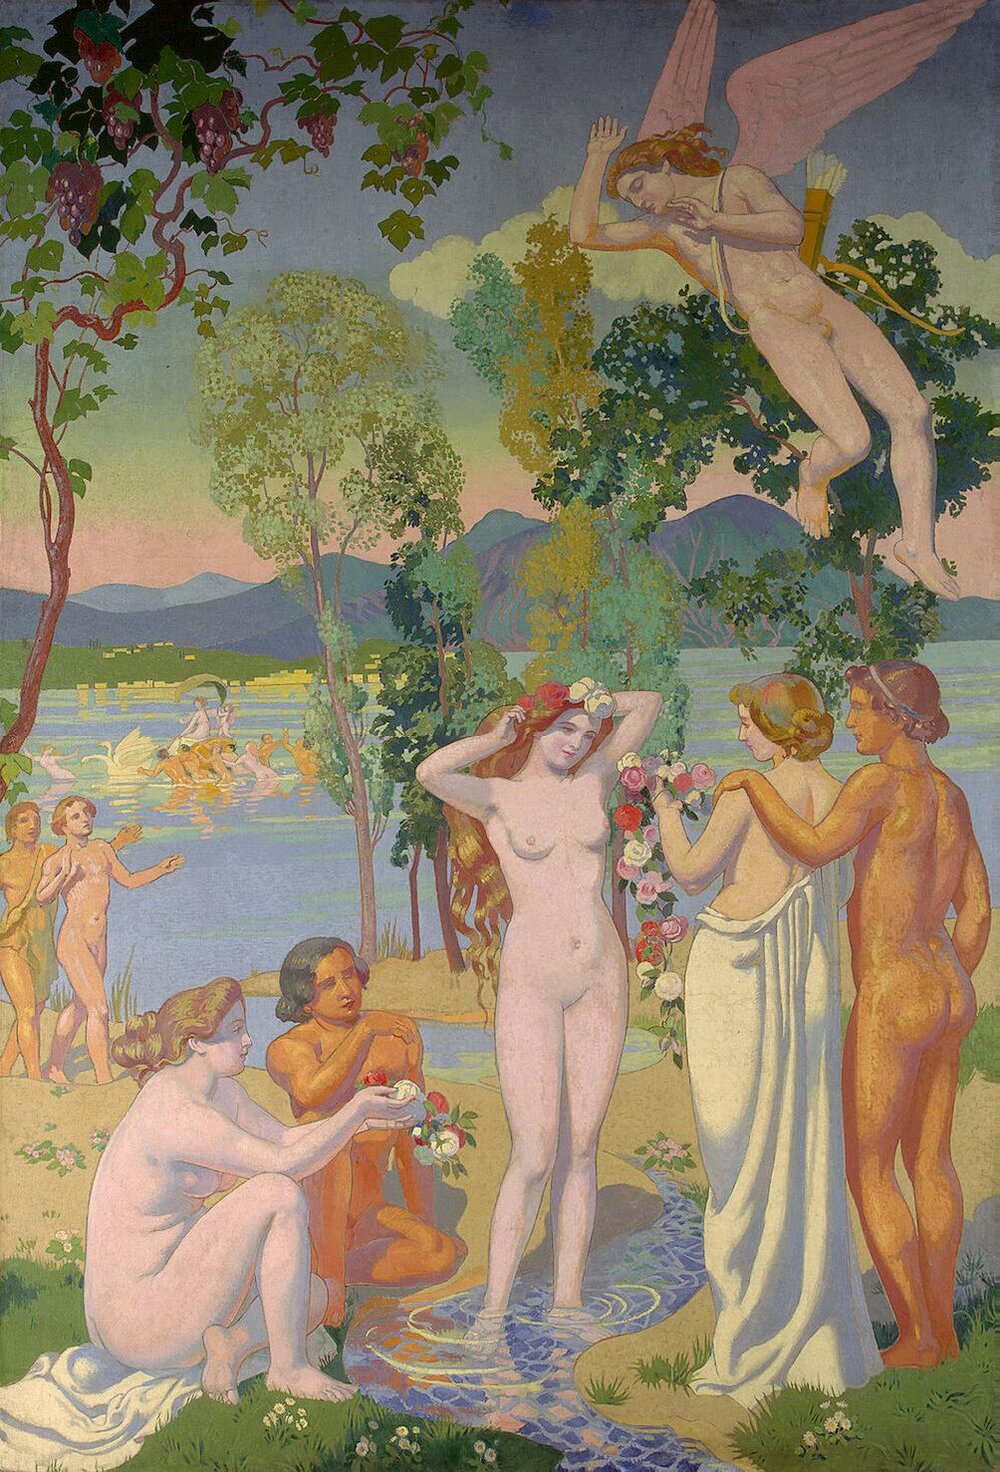 Panel 1 Eros is struck by Psyche's beauty, 1908